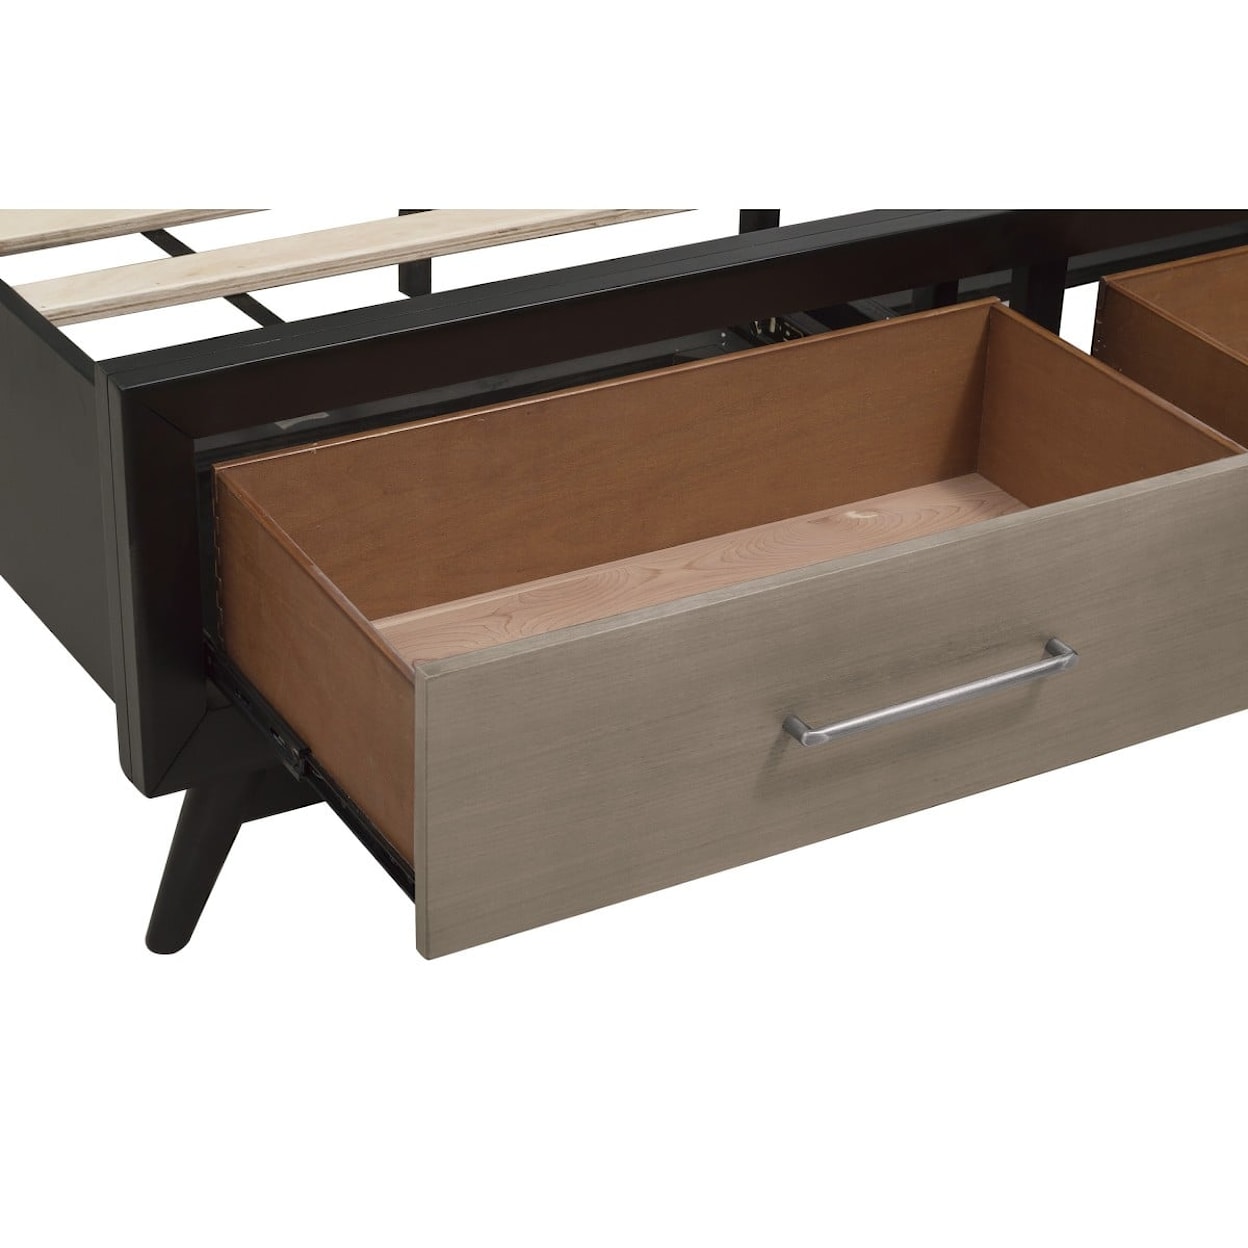 Homelegance Furniture Raku CA King  Bed with FB Storage